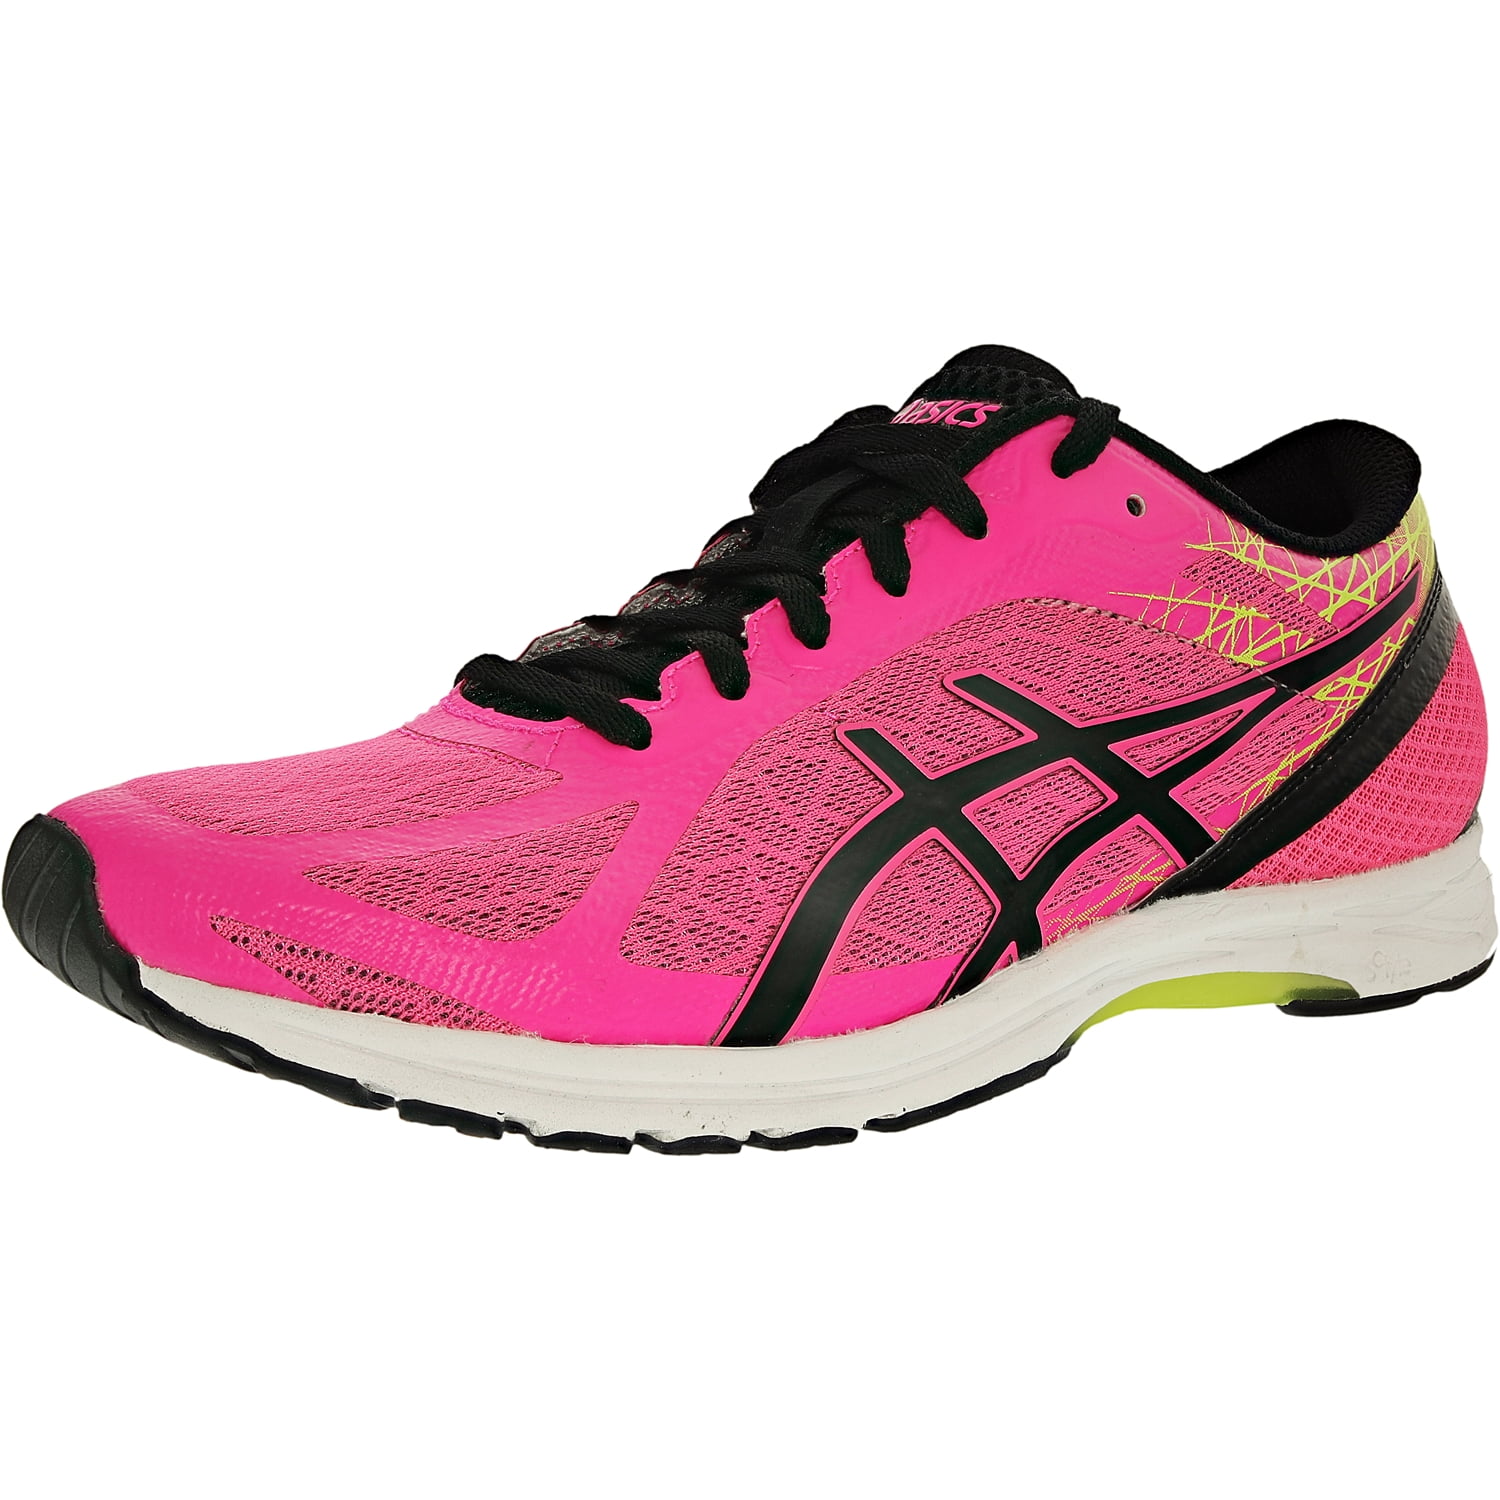 Asics Women's Gel-Ds 11 Hot Pink/Black/Flash Yellow Ankle-High Running Shoe 10M -